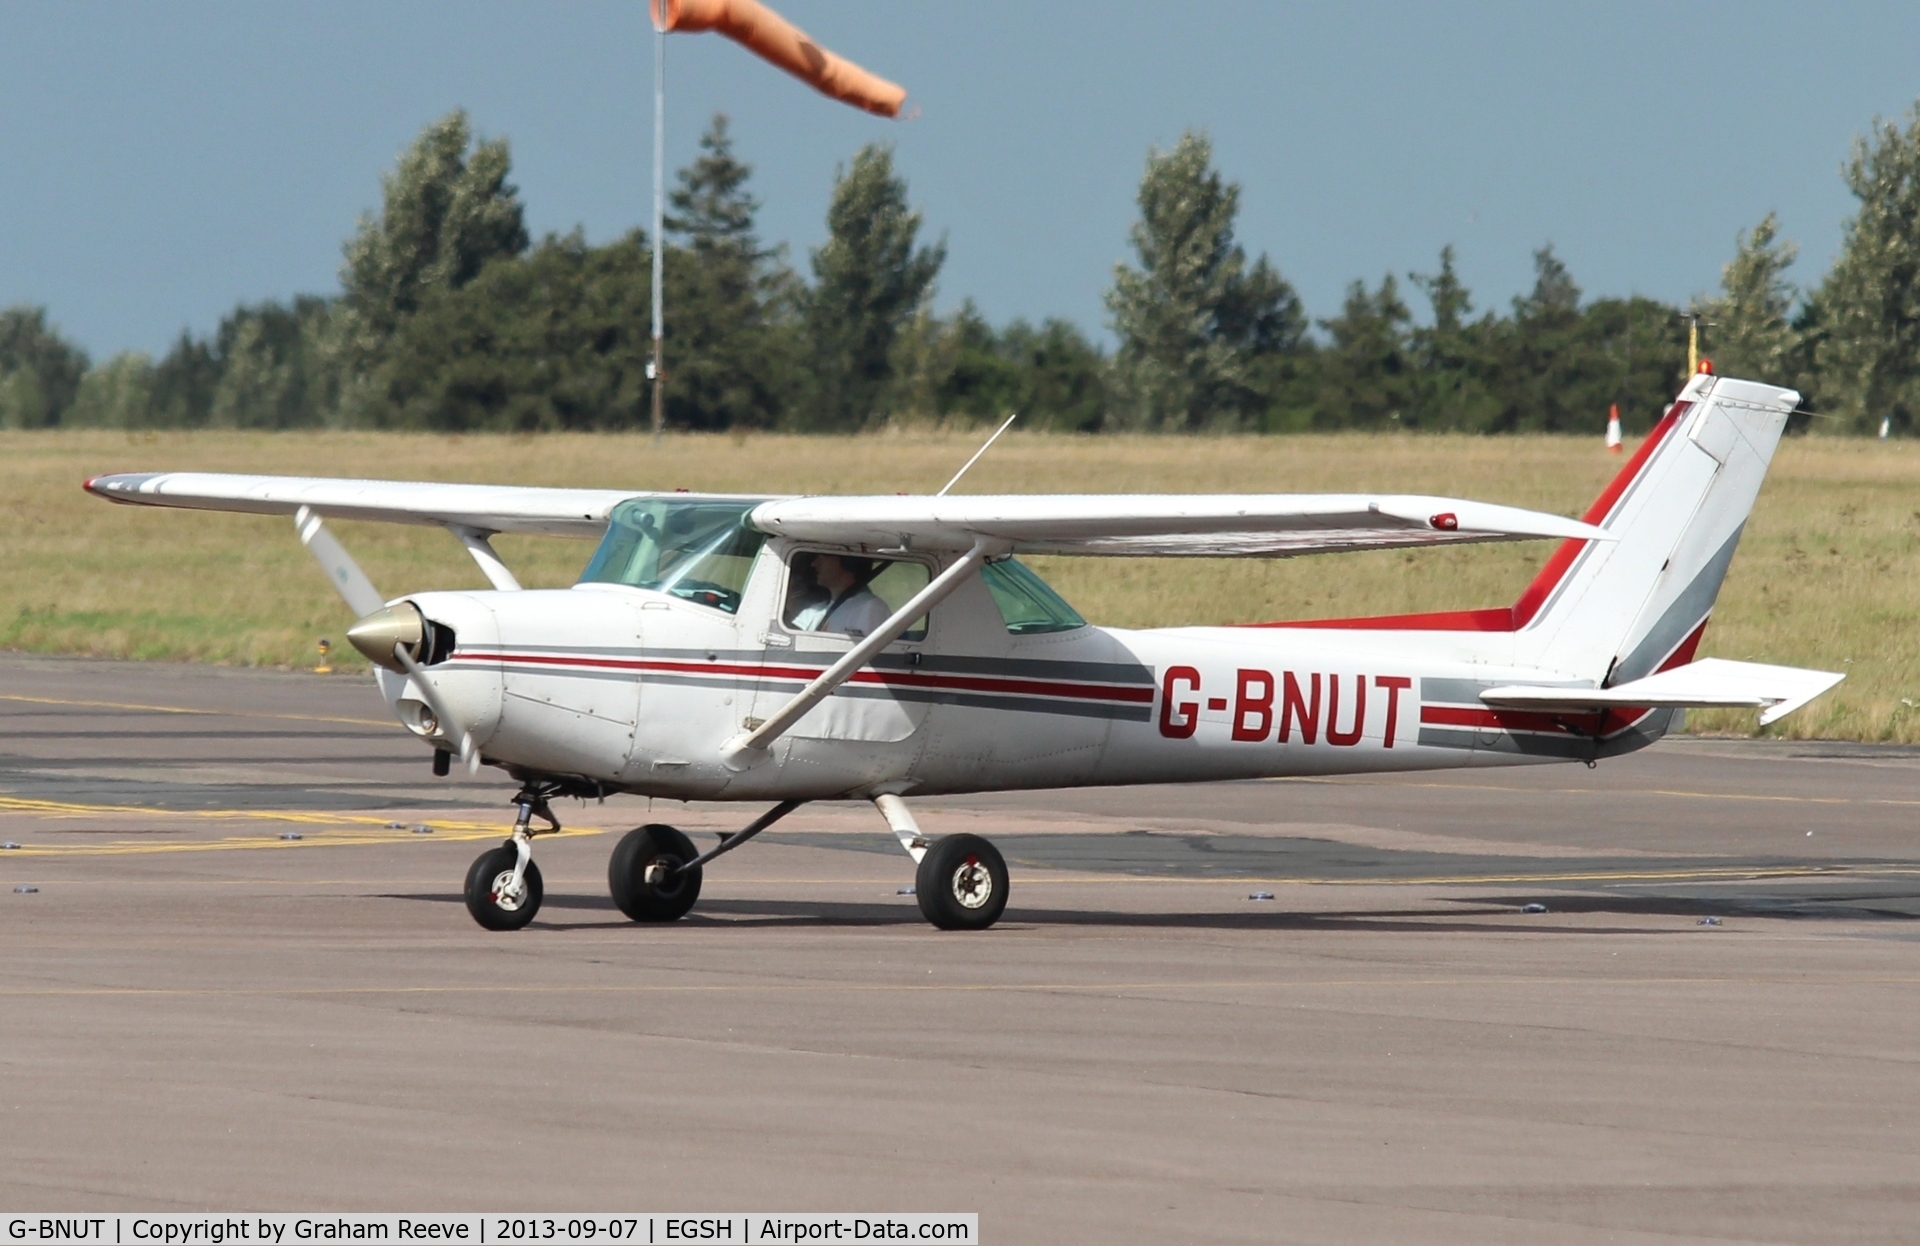 G-BNUT, 1978 Cessna 152 C/N 152-79458, Judt landed at Norwich.